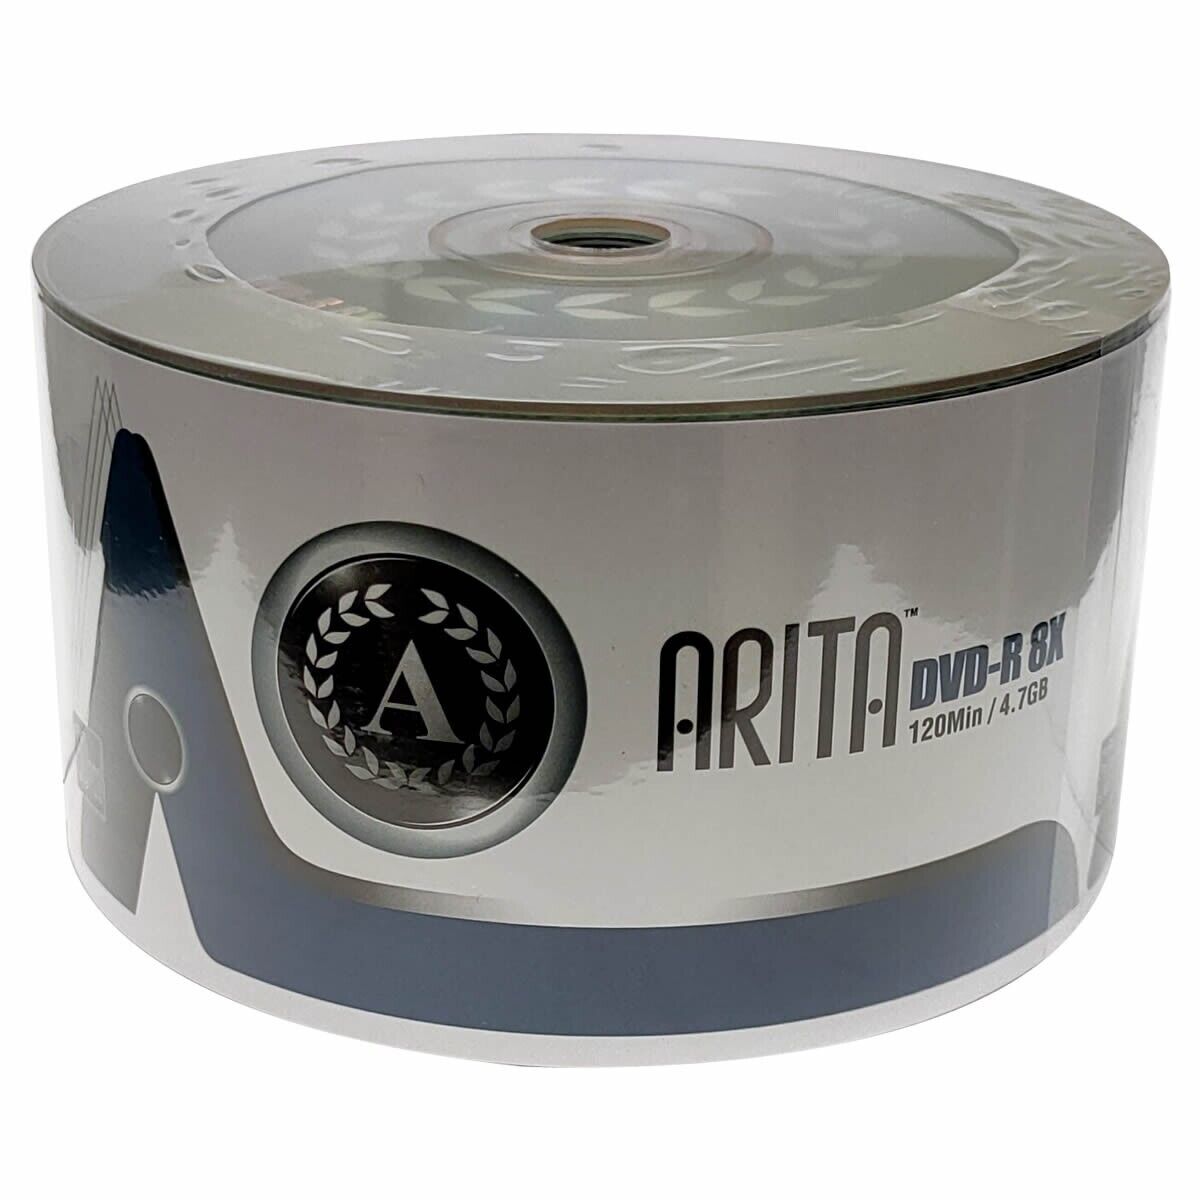 Arita Branded RITEK 8x Speed 4.7GB DVD-R Discs - 50 PACK